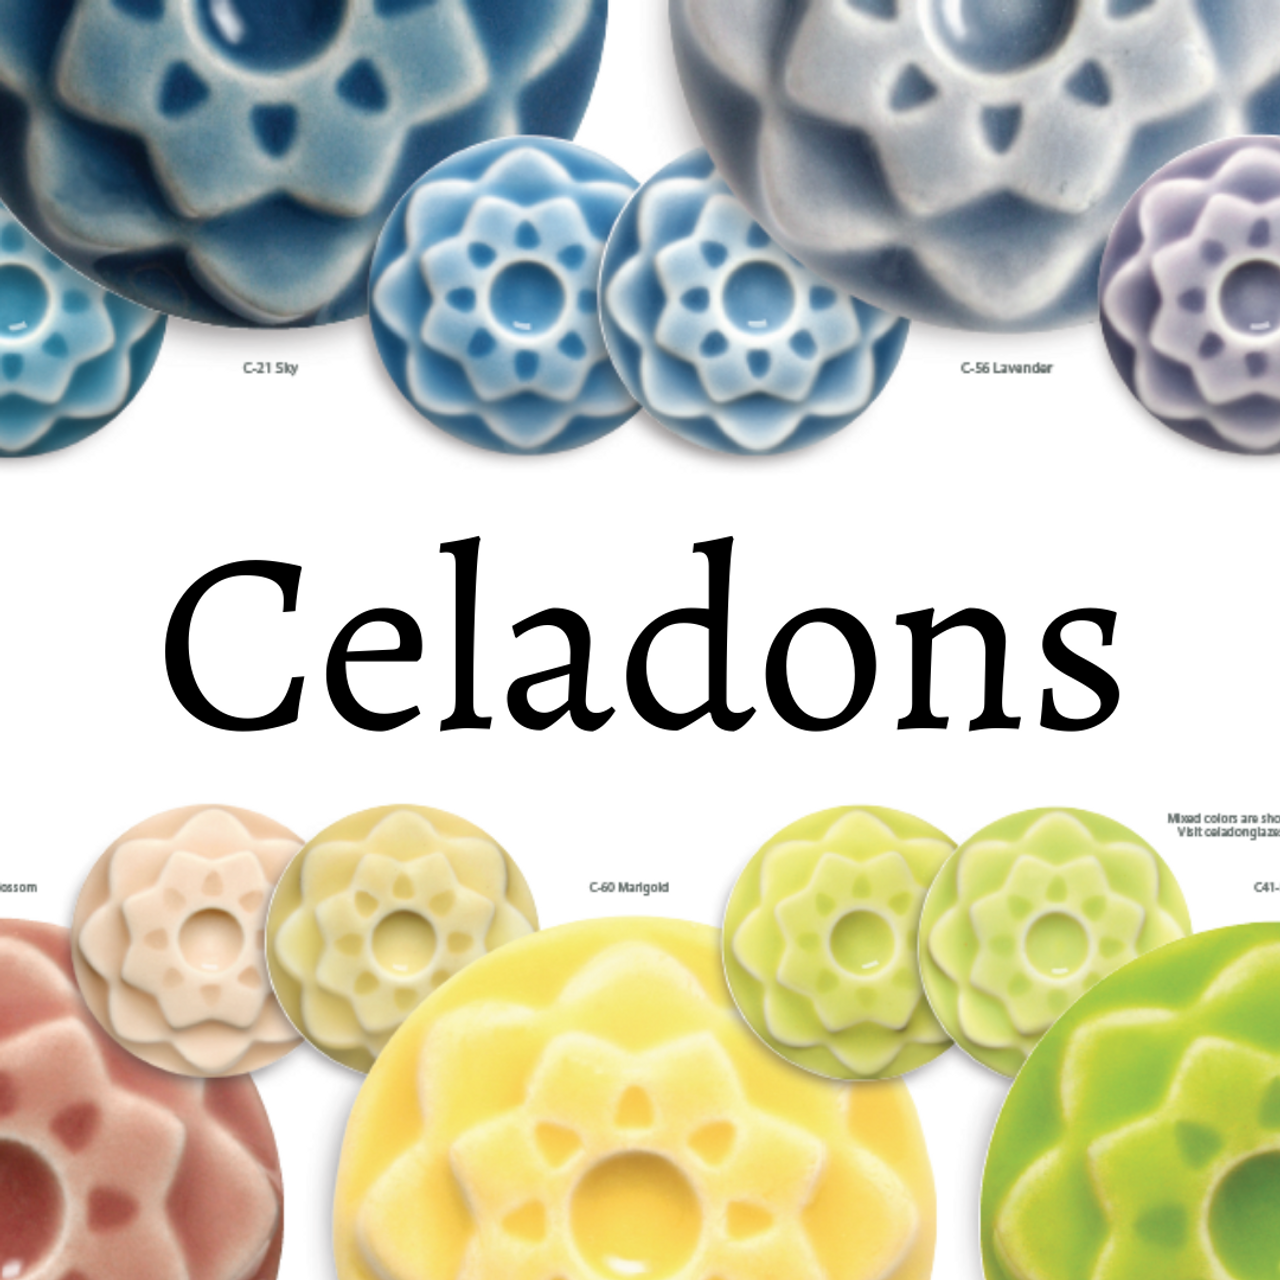 Celadons